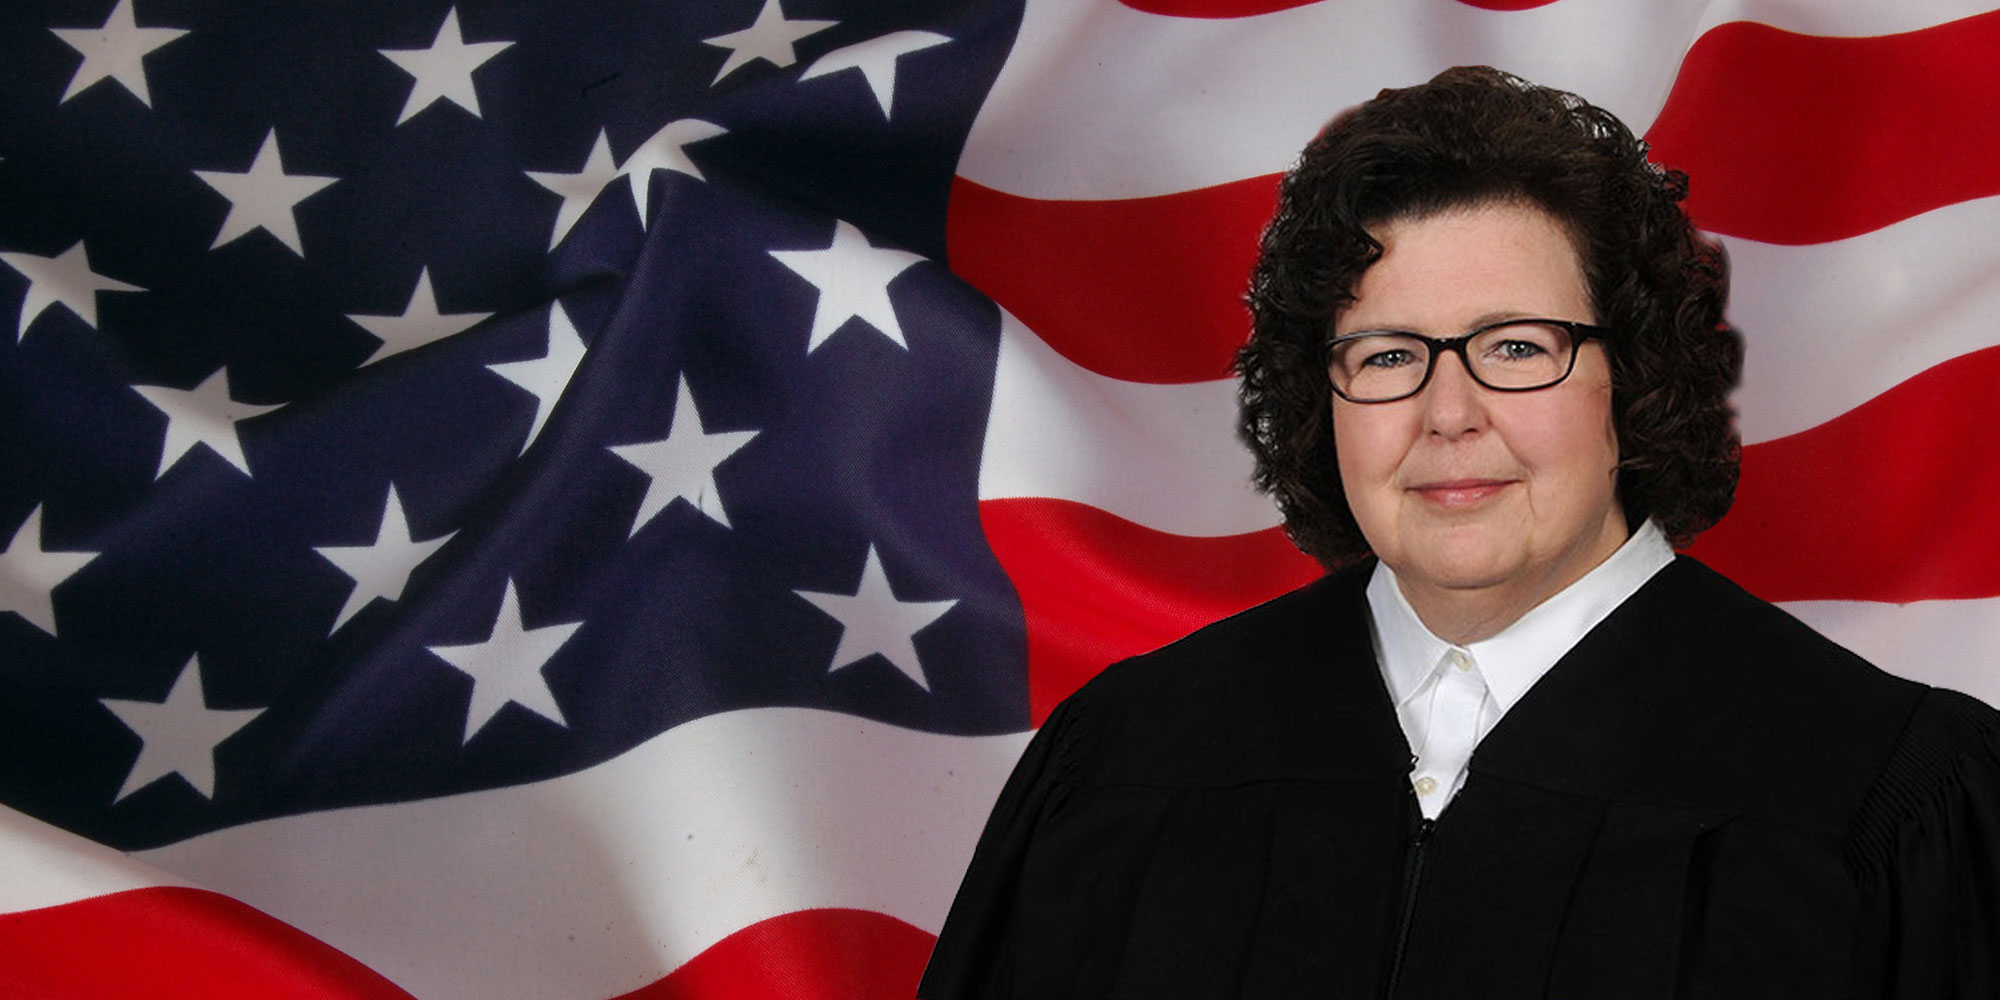 Judge Elizabeth Burns